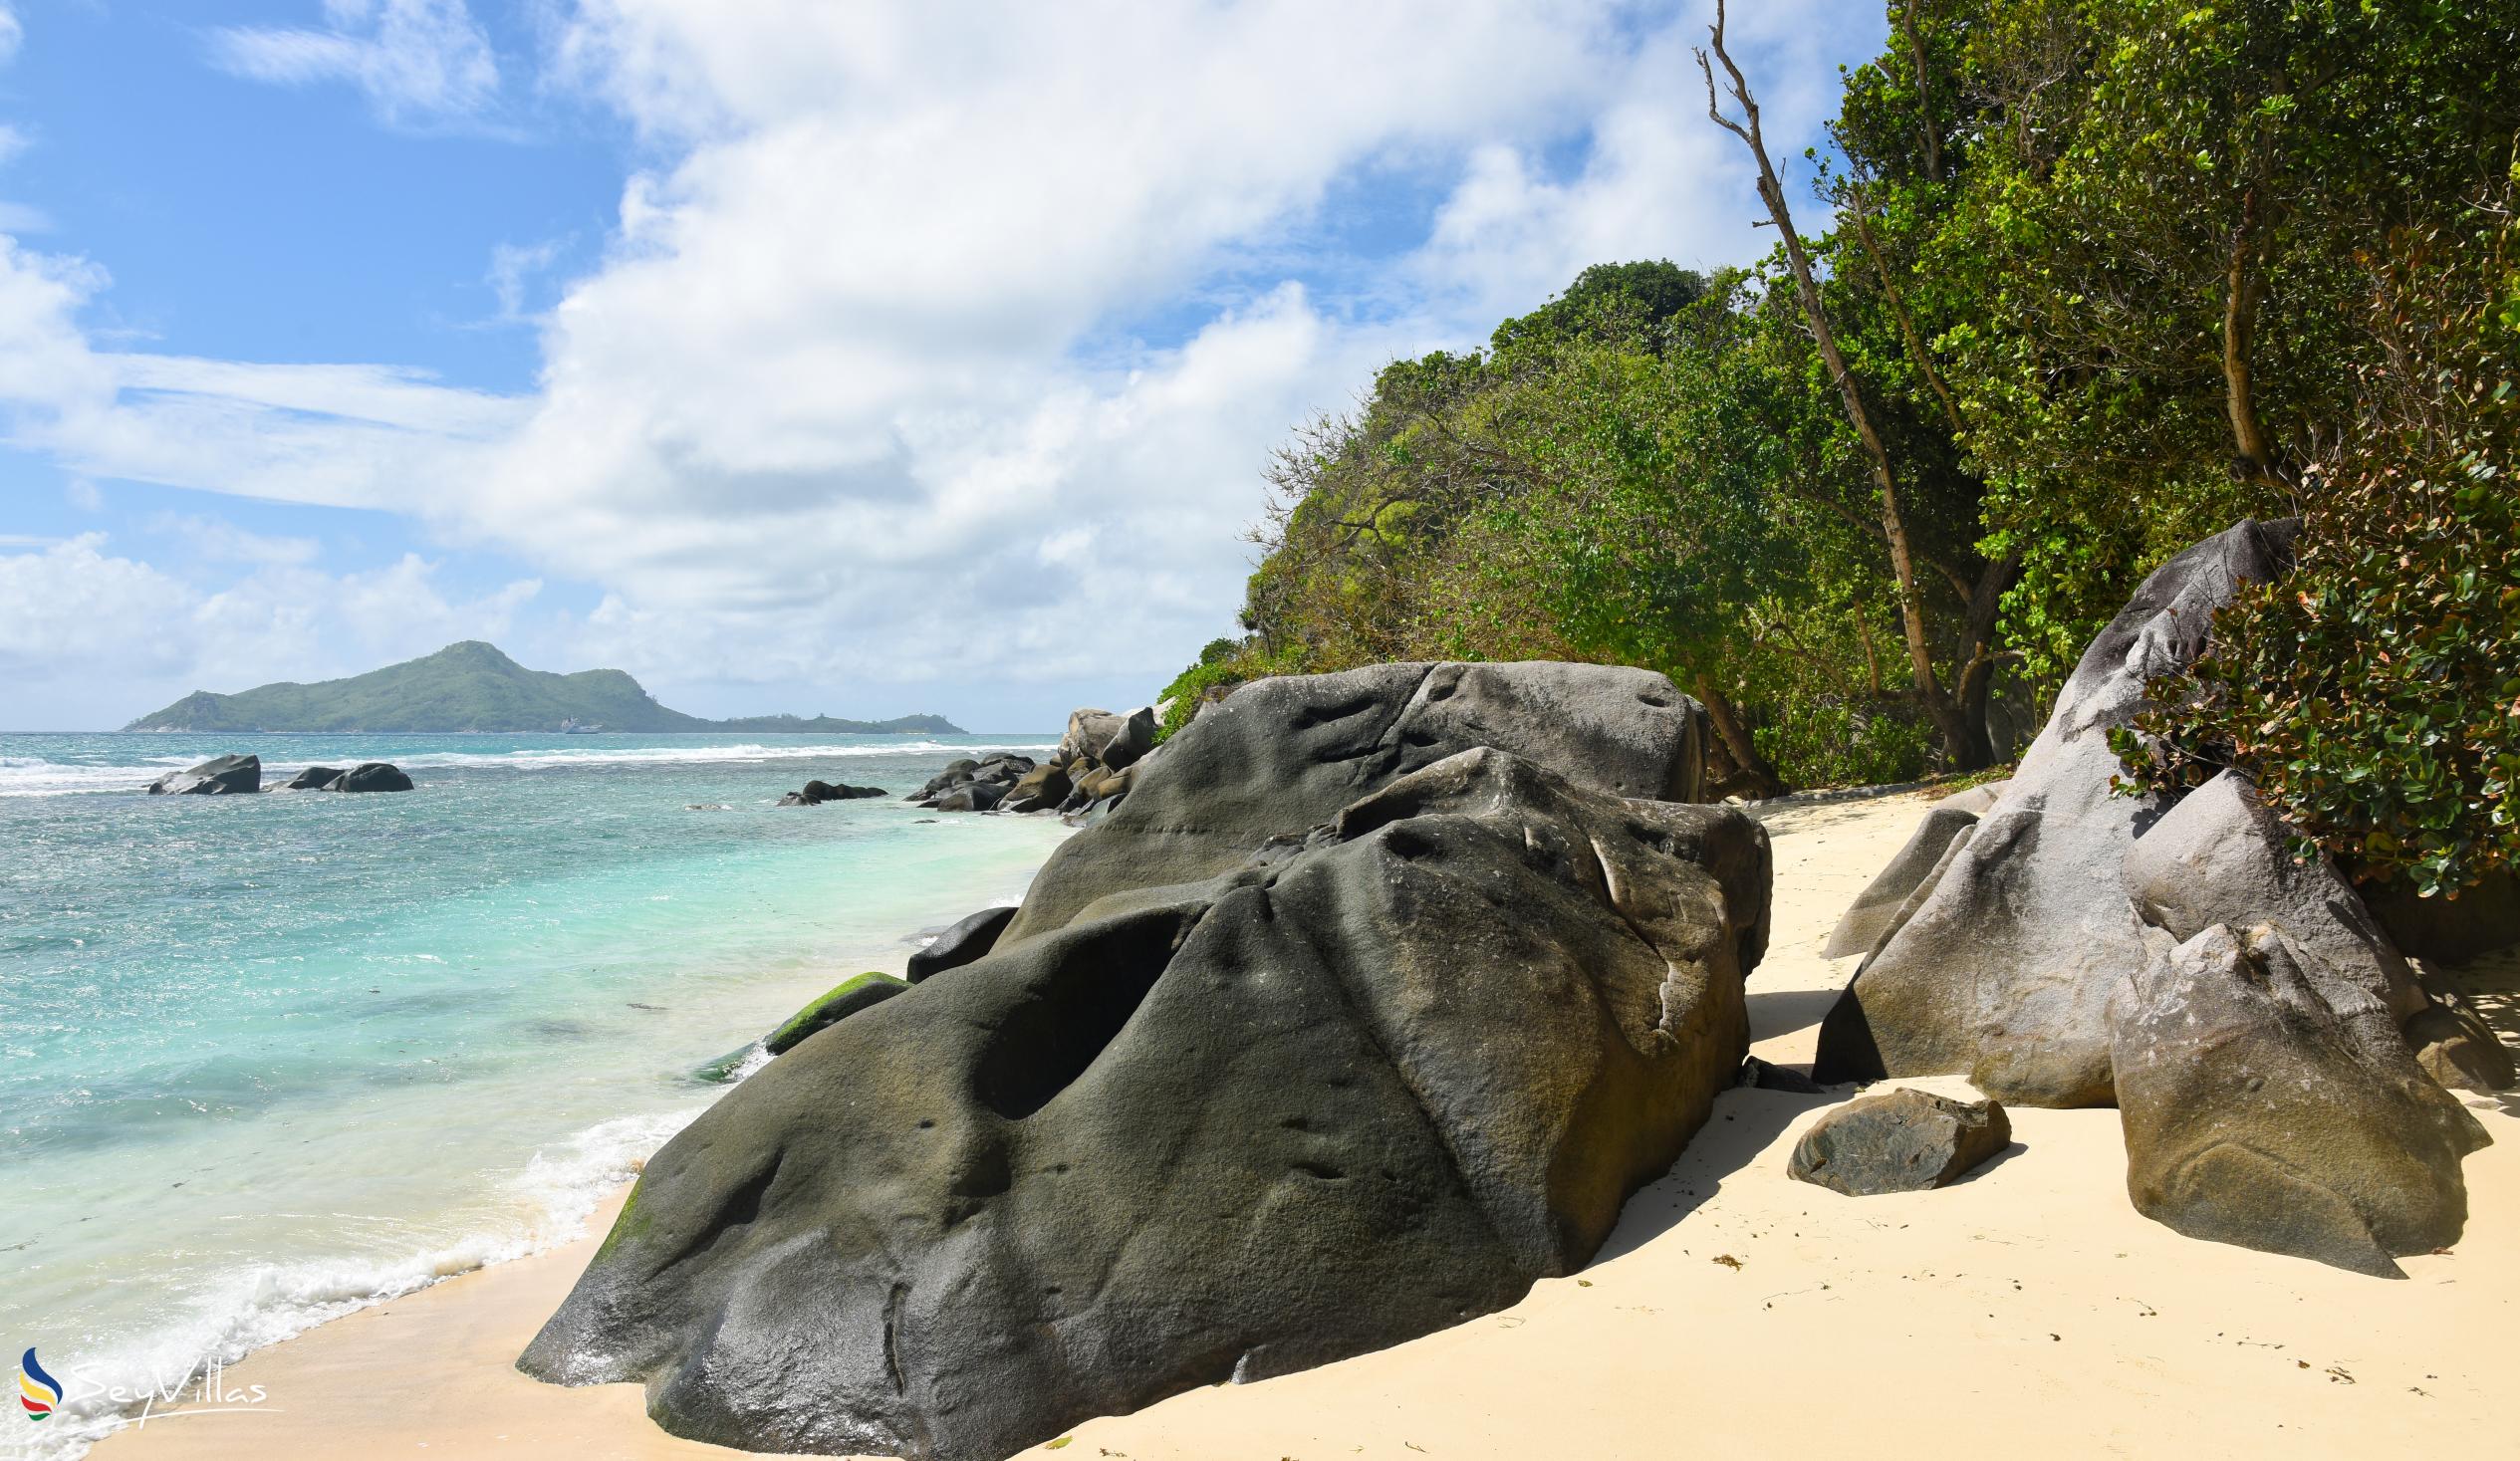 Photo 7: Anse Nord d'Est - Mahé (Seychelles)